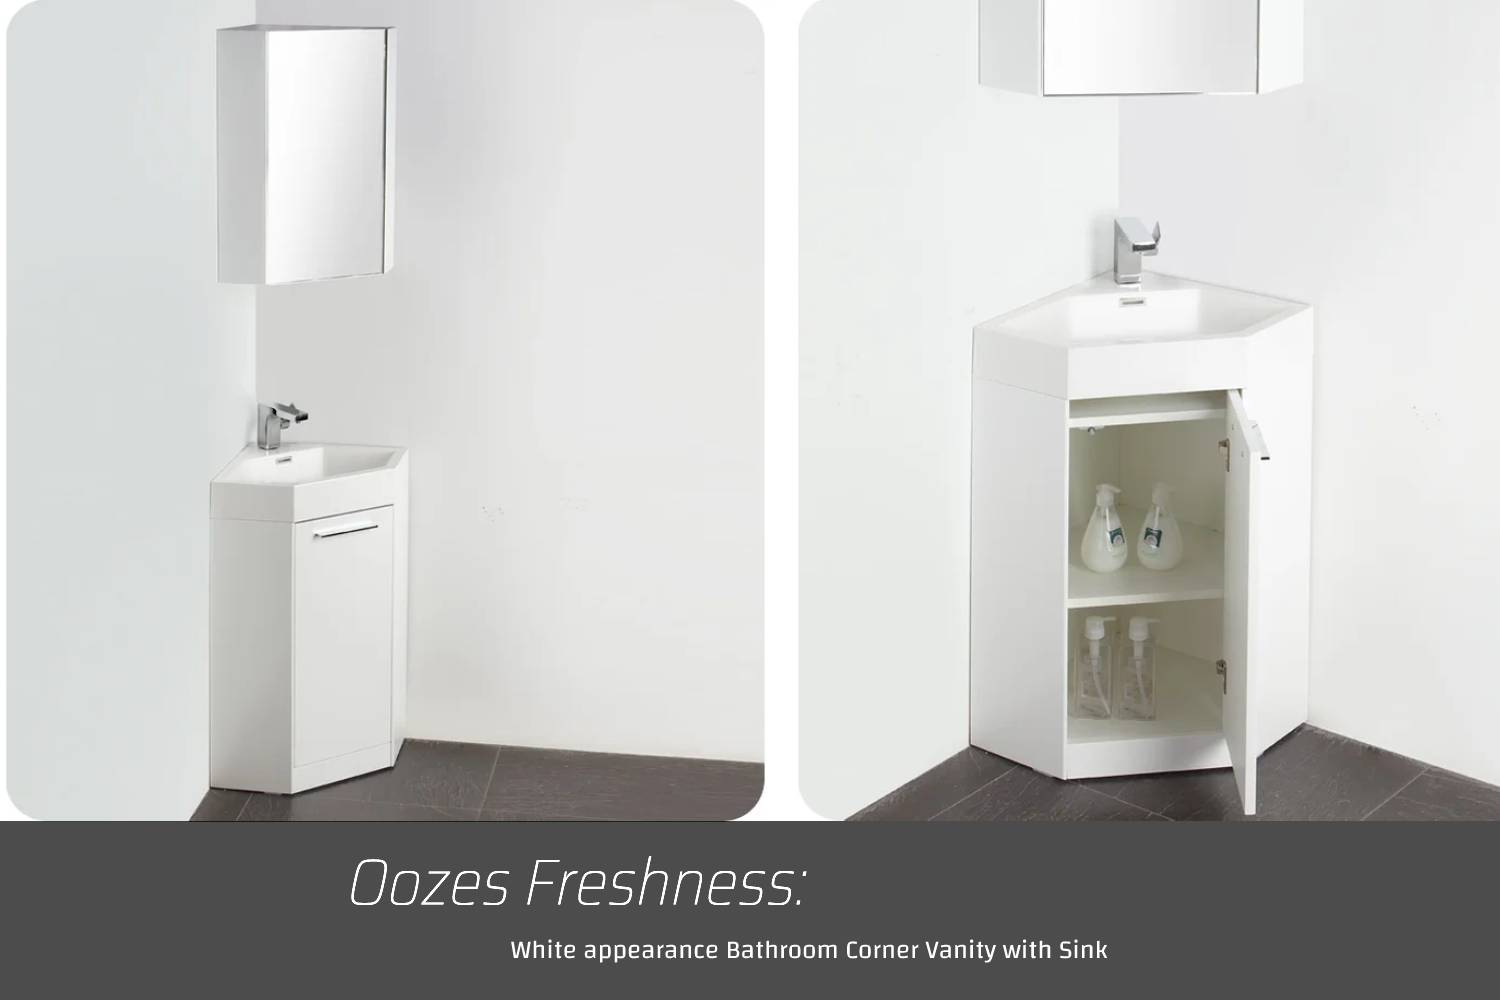 Oozes freshness white appearance bathroom corner vanity with sink